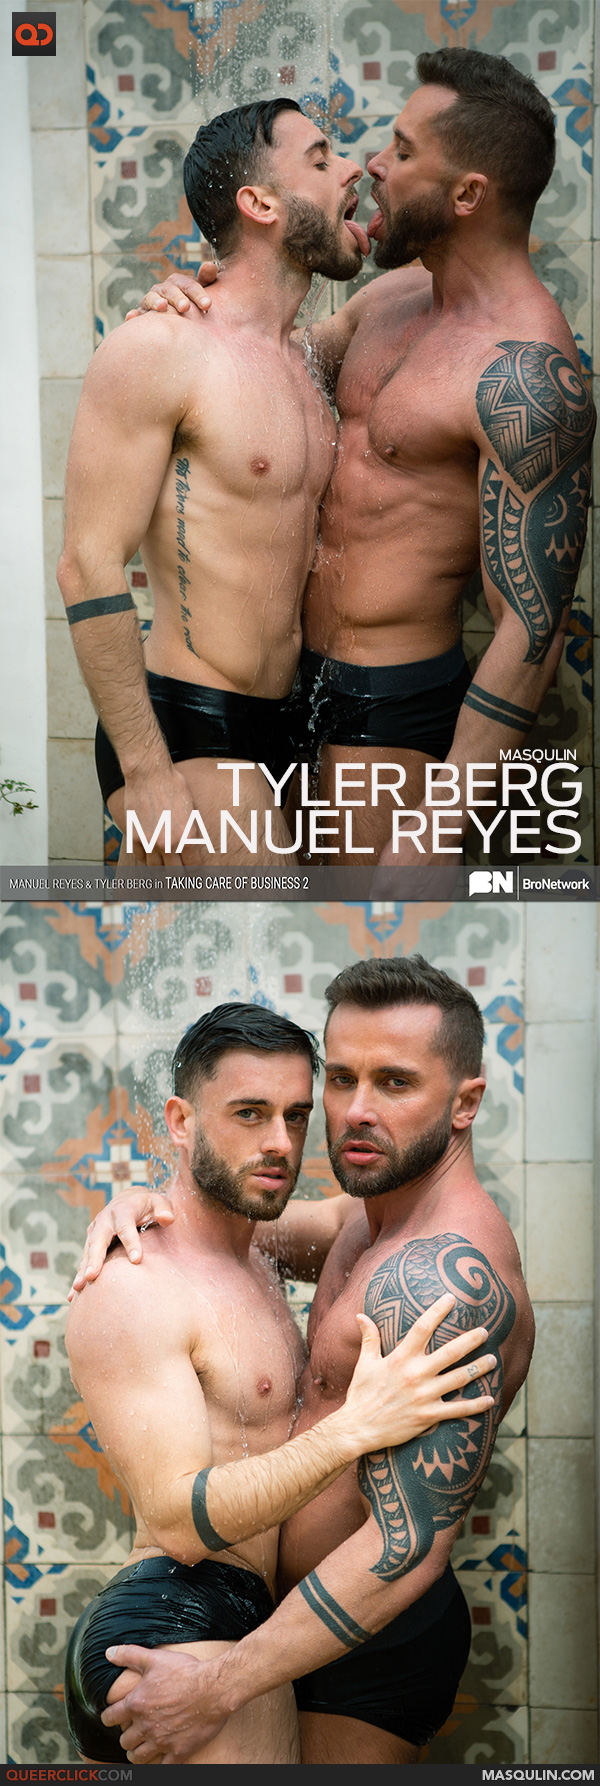 The Bro Network | Masqulin: Tyler Berg and Manuel Reyes